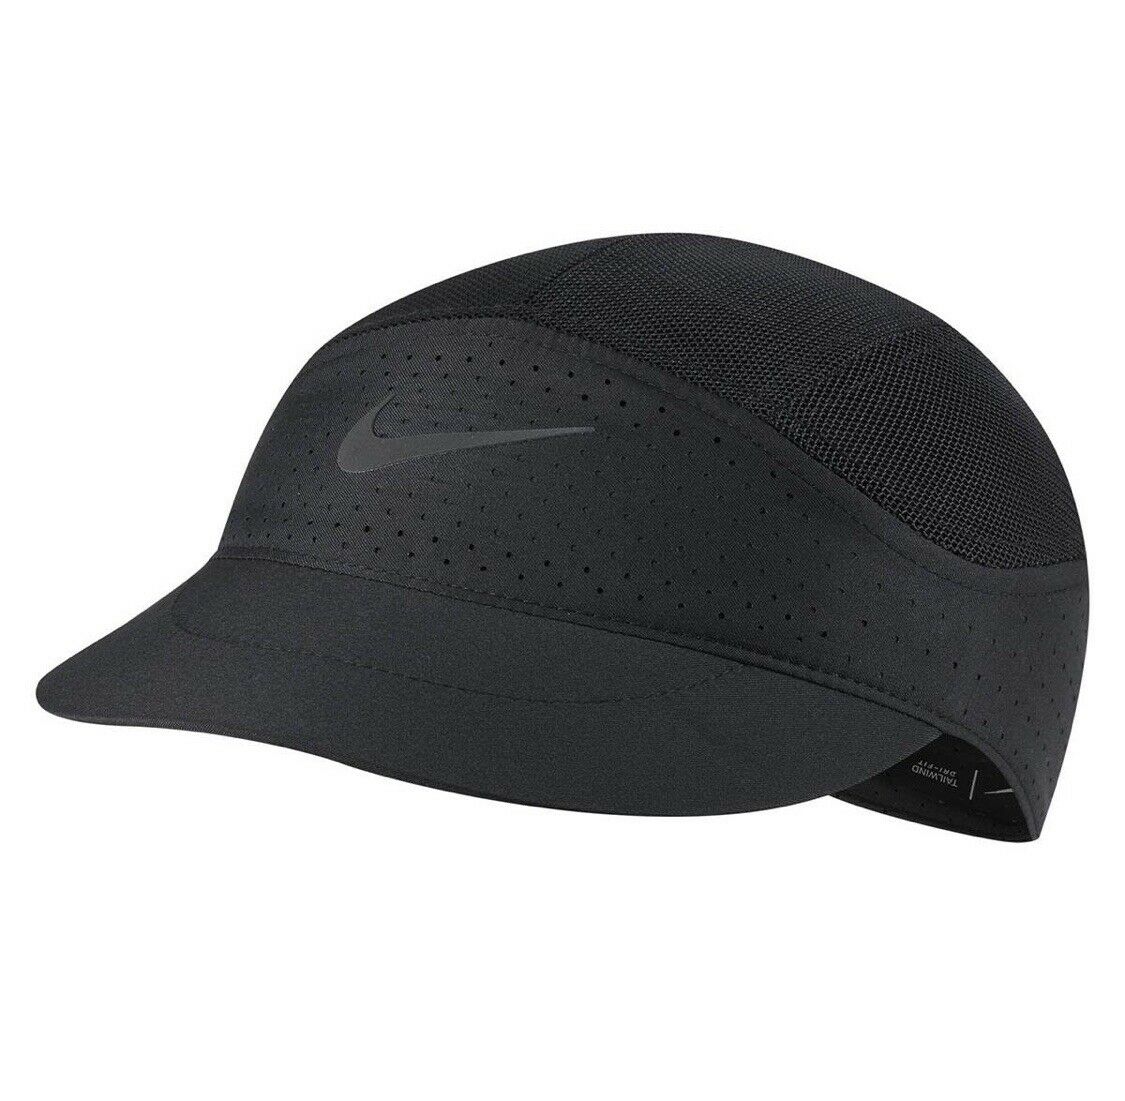 Nike Adult Unisex DRI-FIT Running Cap/Hat-Black CQ9366-010 – VALLEYSPORTING